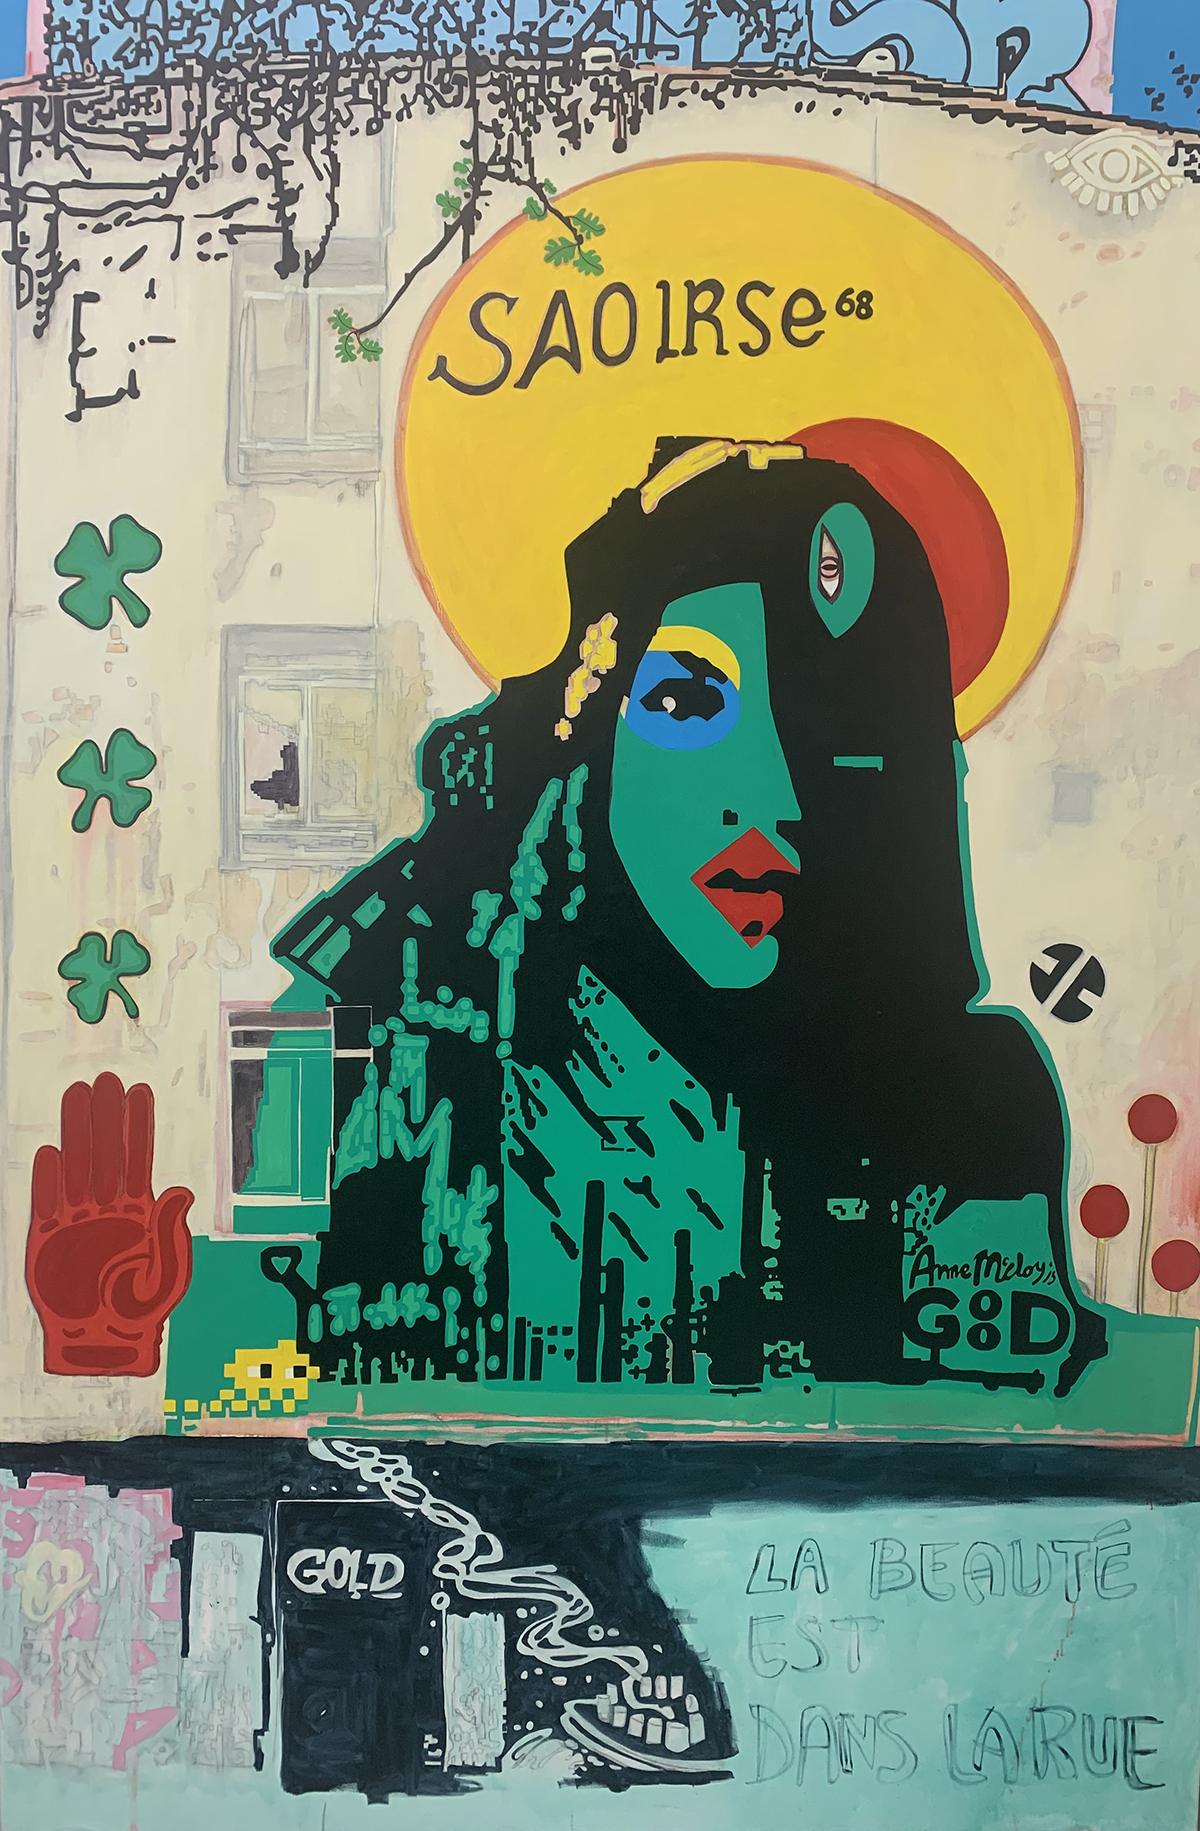 An oil painting featuring Saoirse68 (My Dark Rosaleen) mural from Rivington Street, Shoreditch, London.